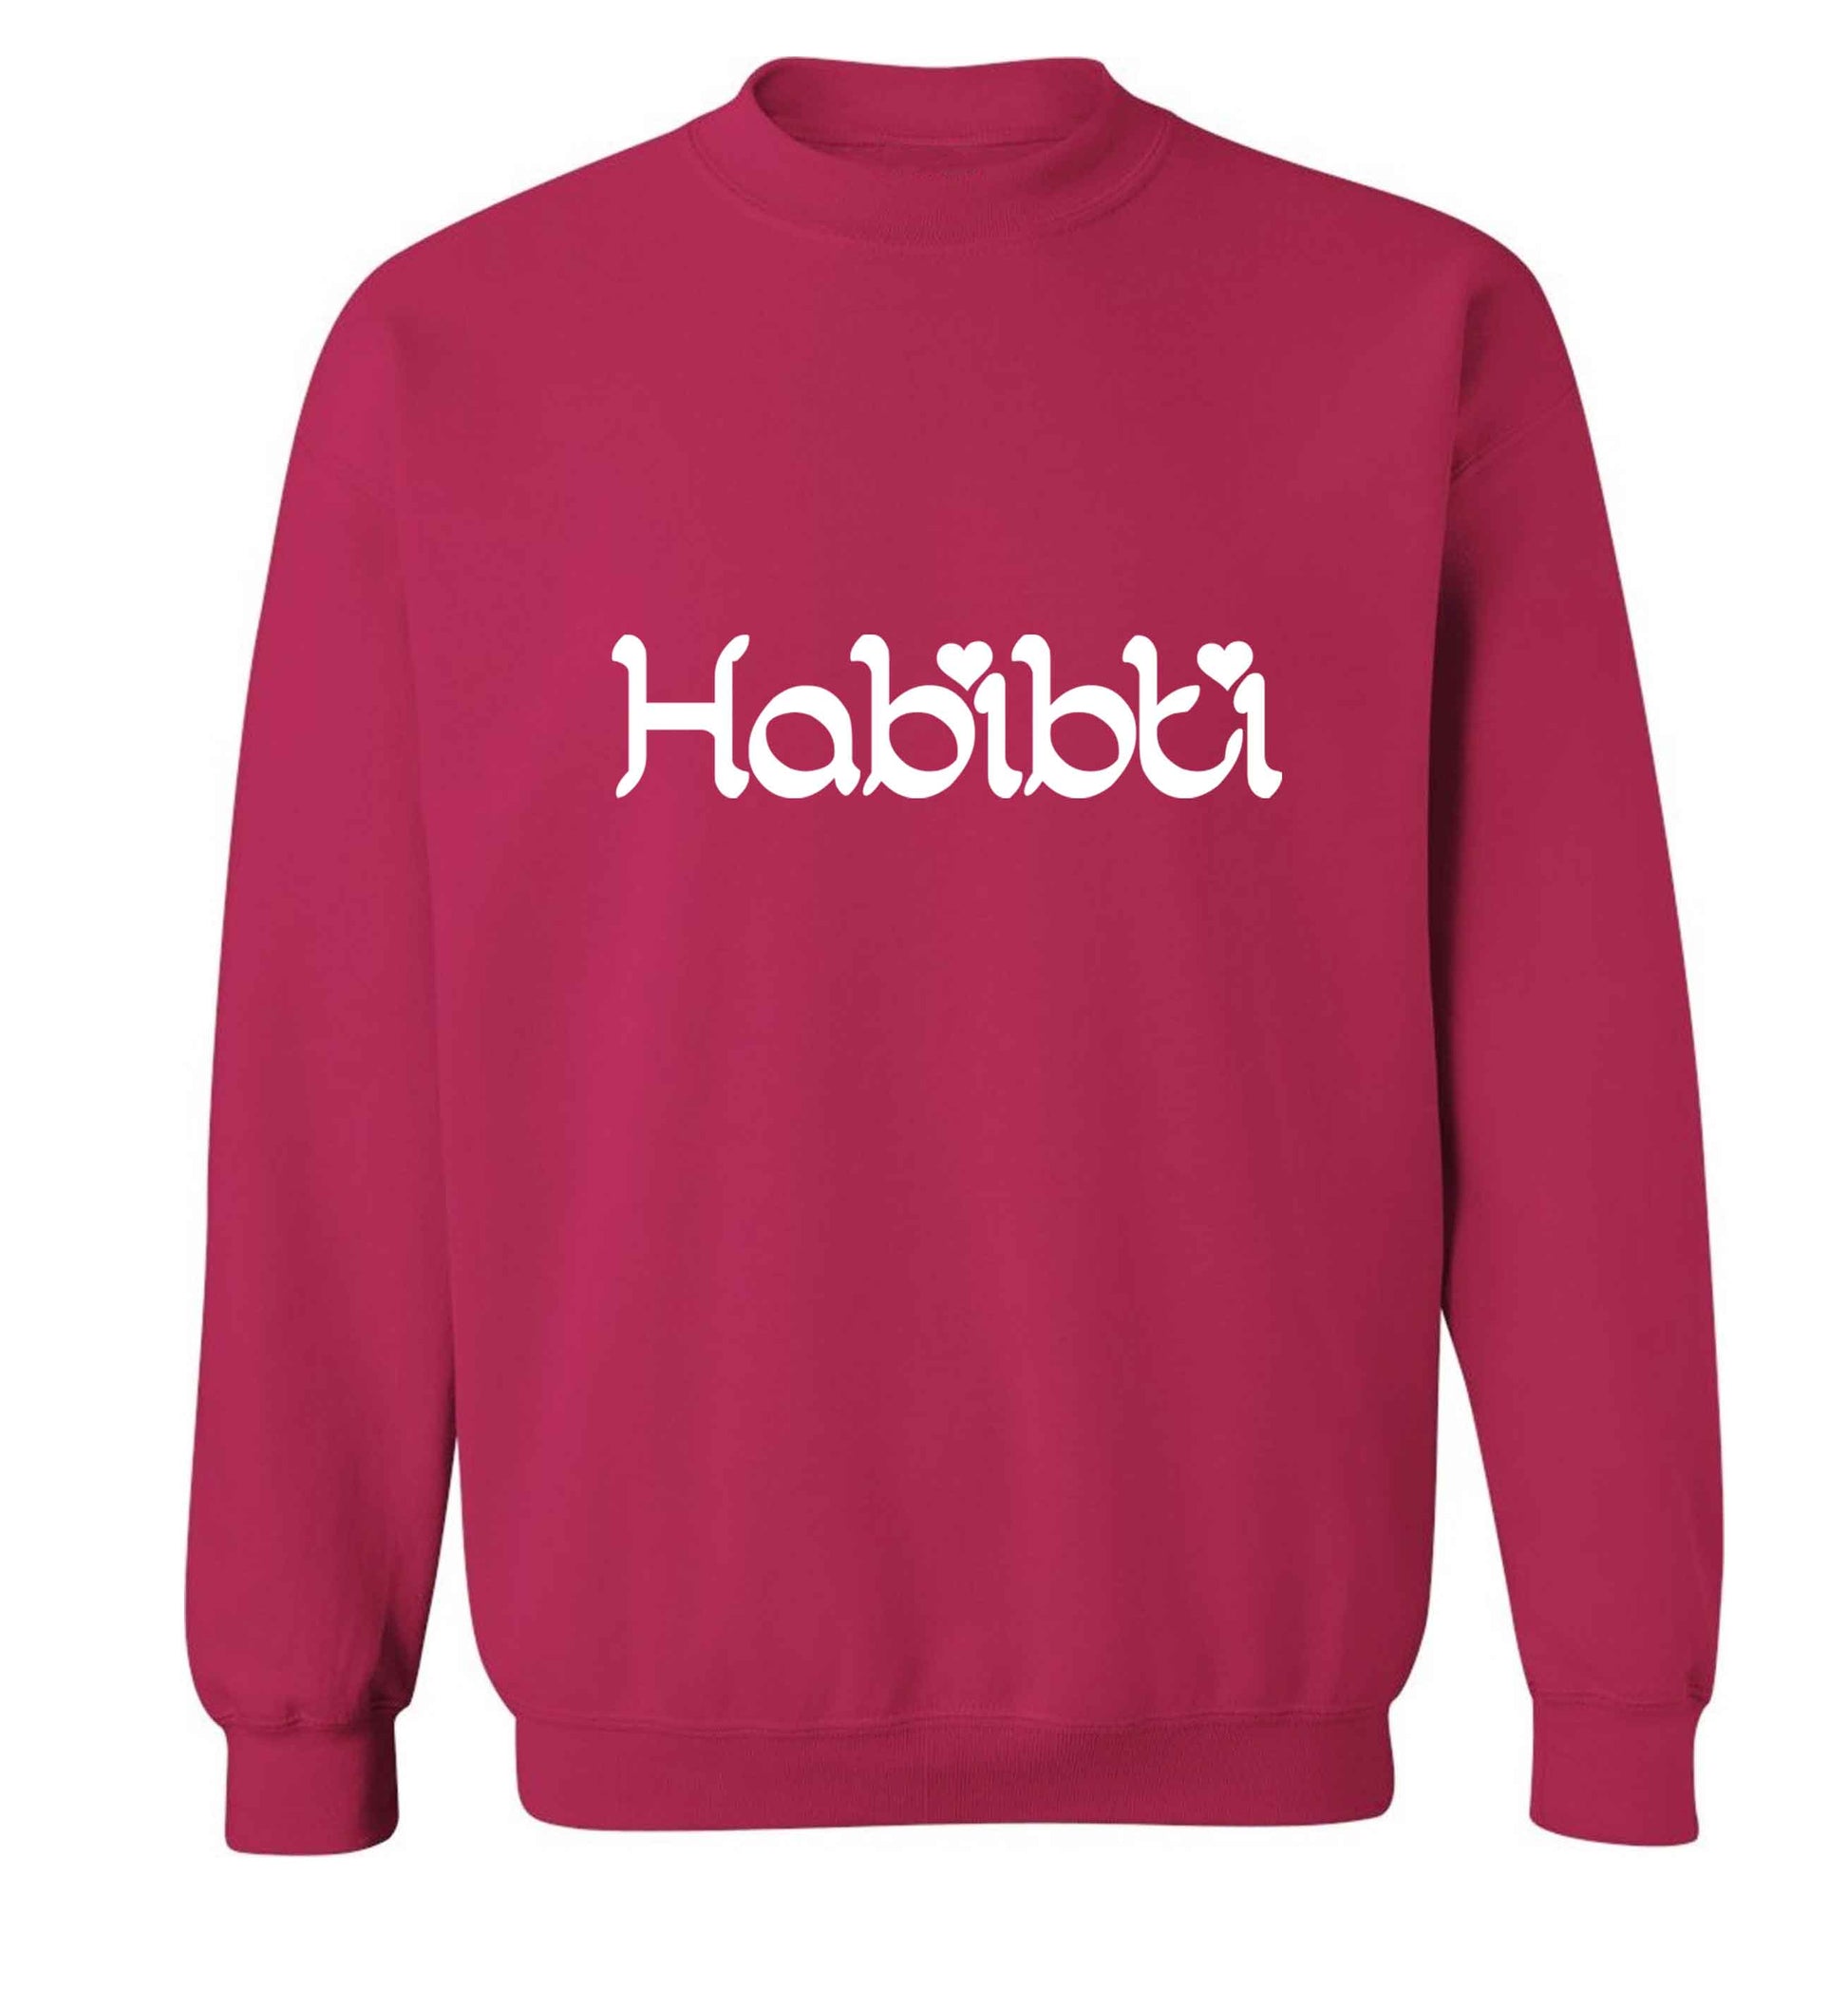 Habibiti adult's unisex pink sweater 2XL